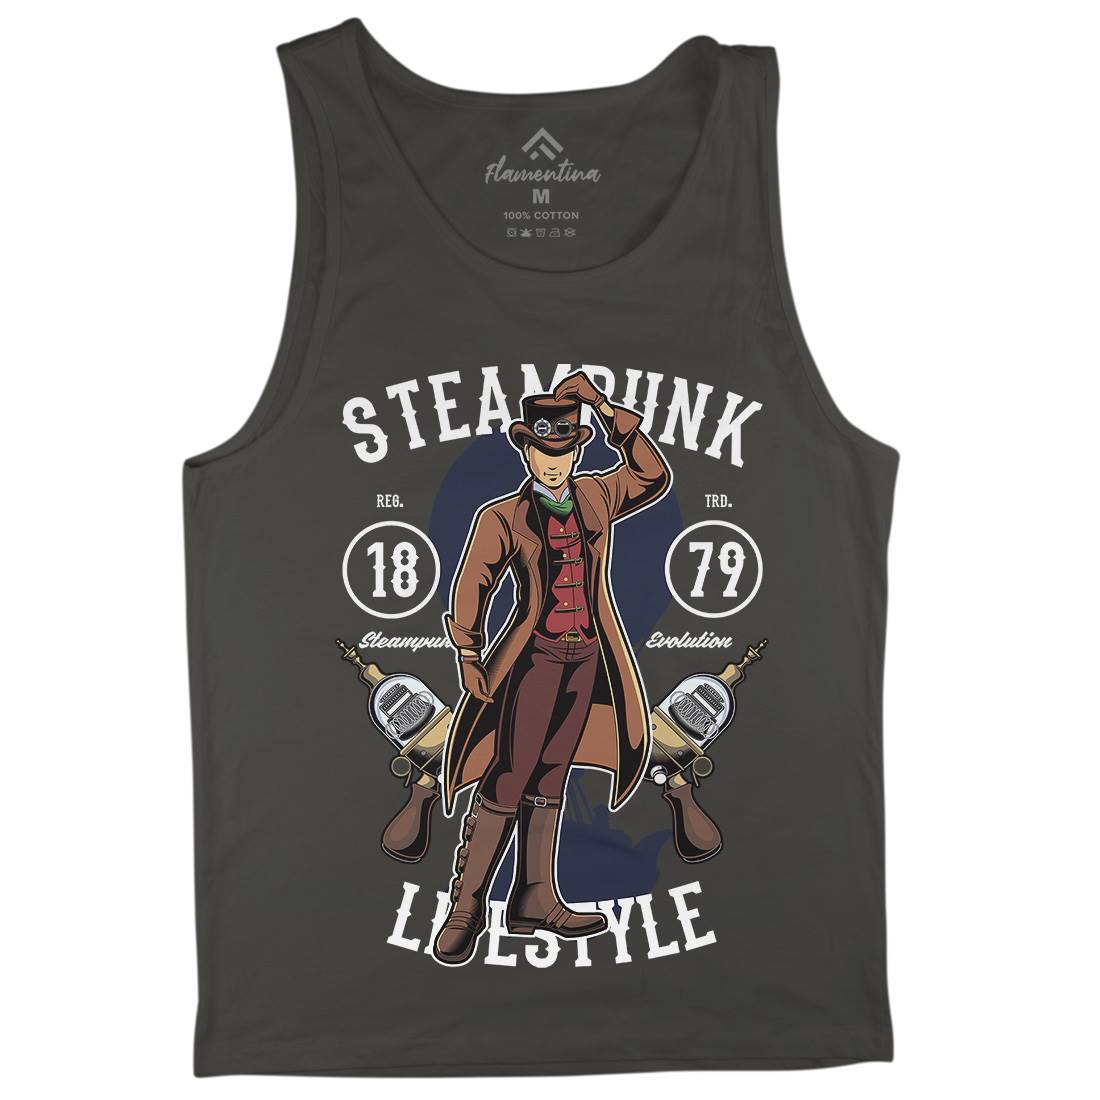 Lifestyle Mens Tank Top Vest Steampunk C450